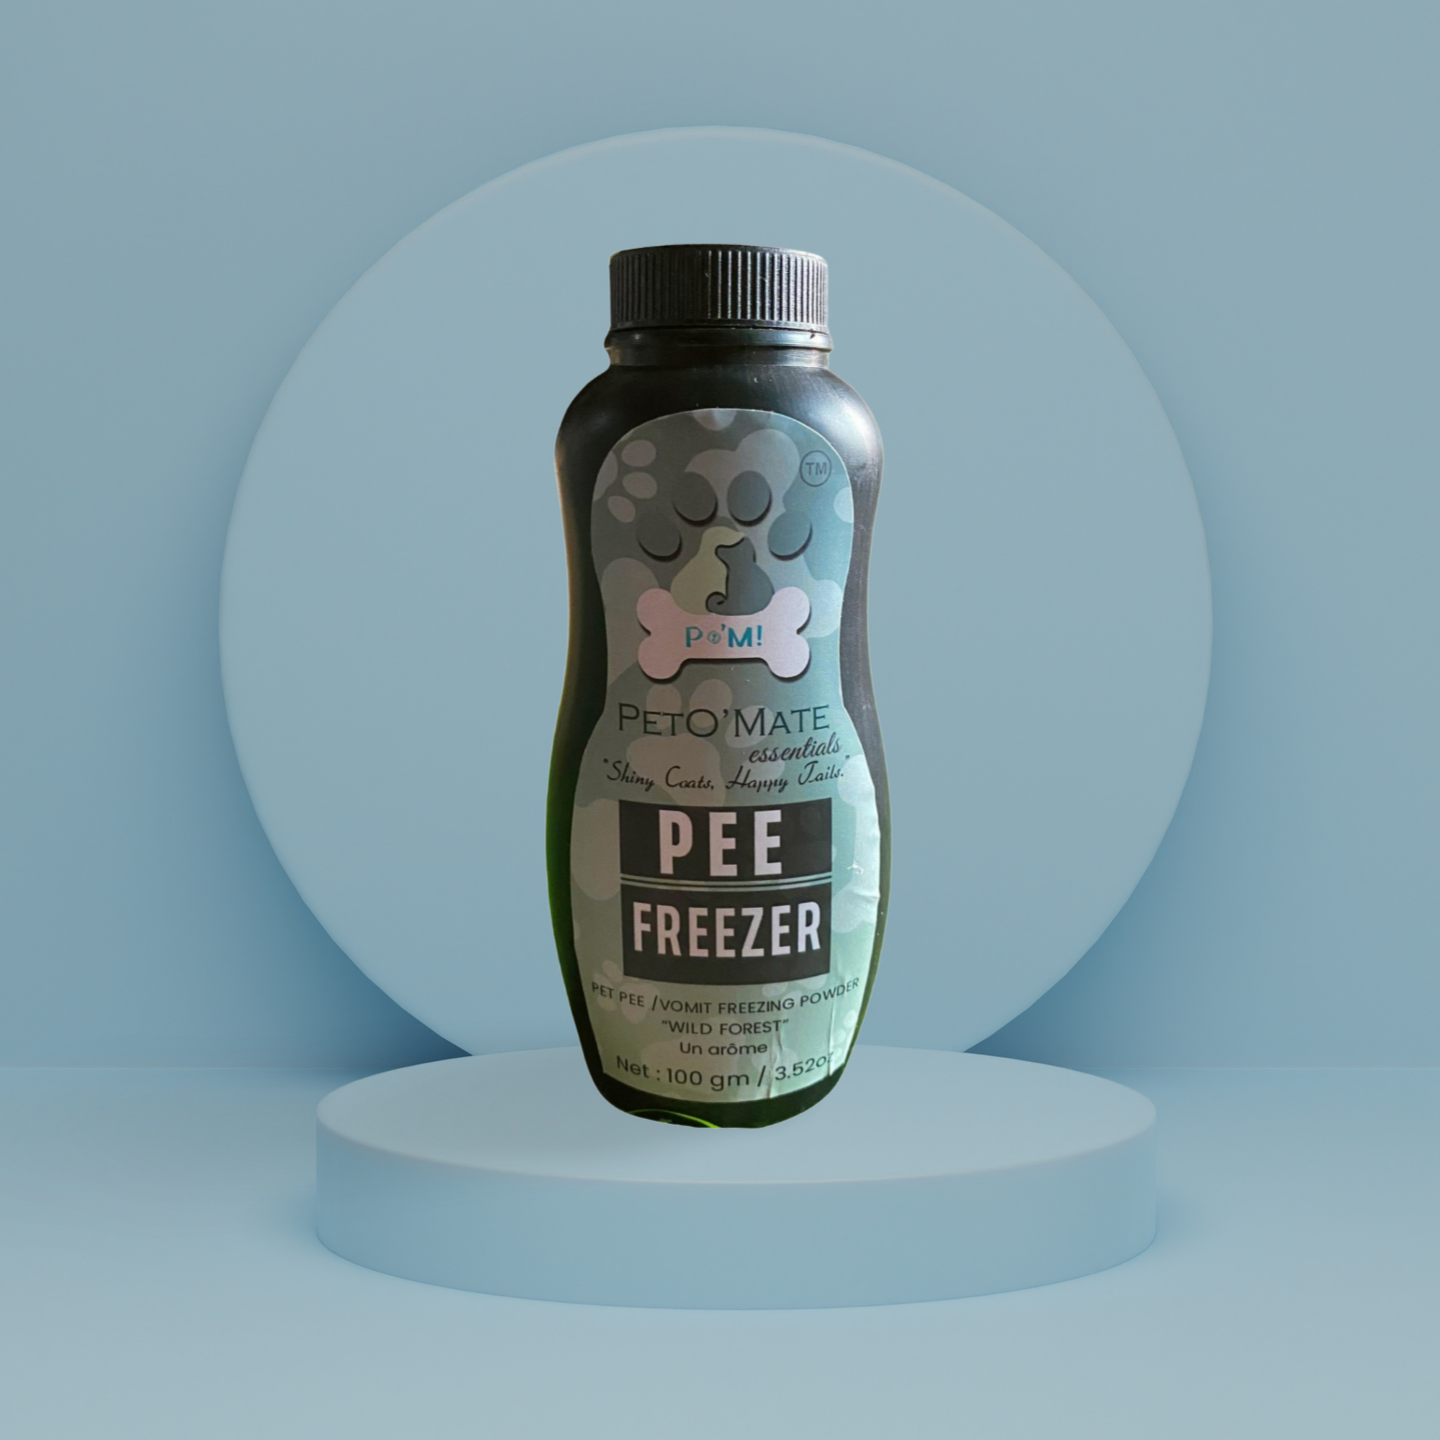 PetO'Mate Essentials Pee Freezer Wild Forest - 100gm